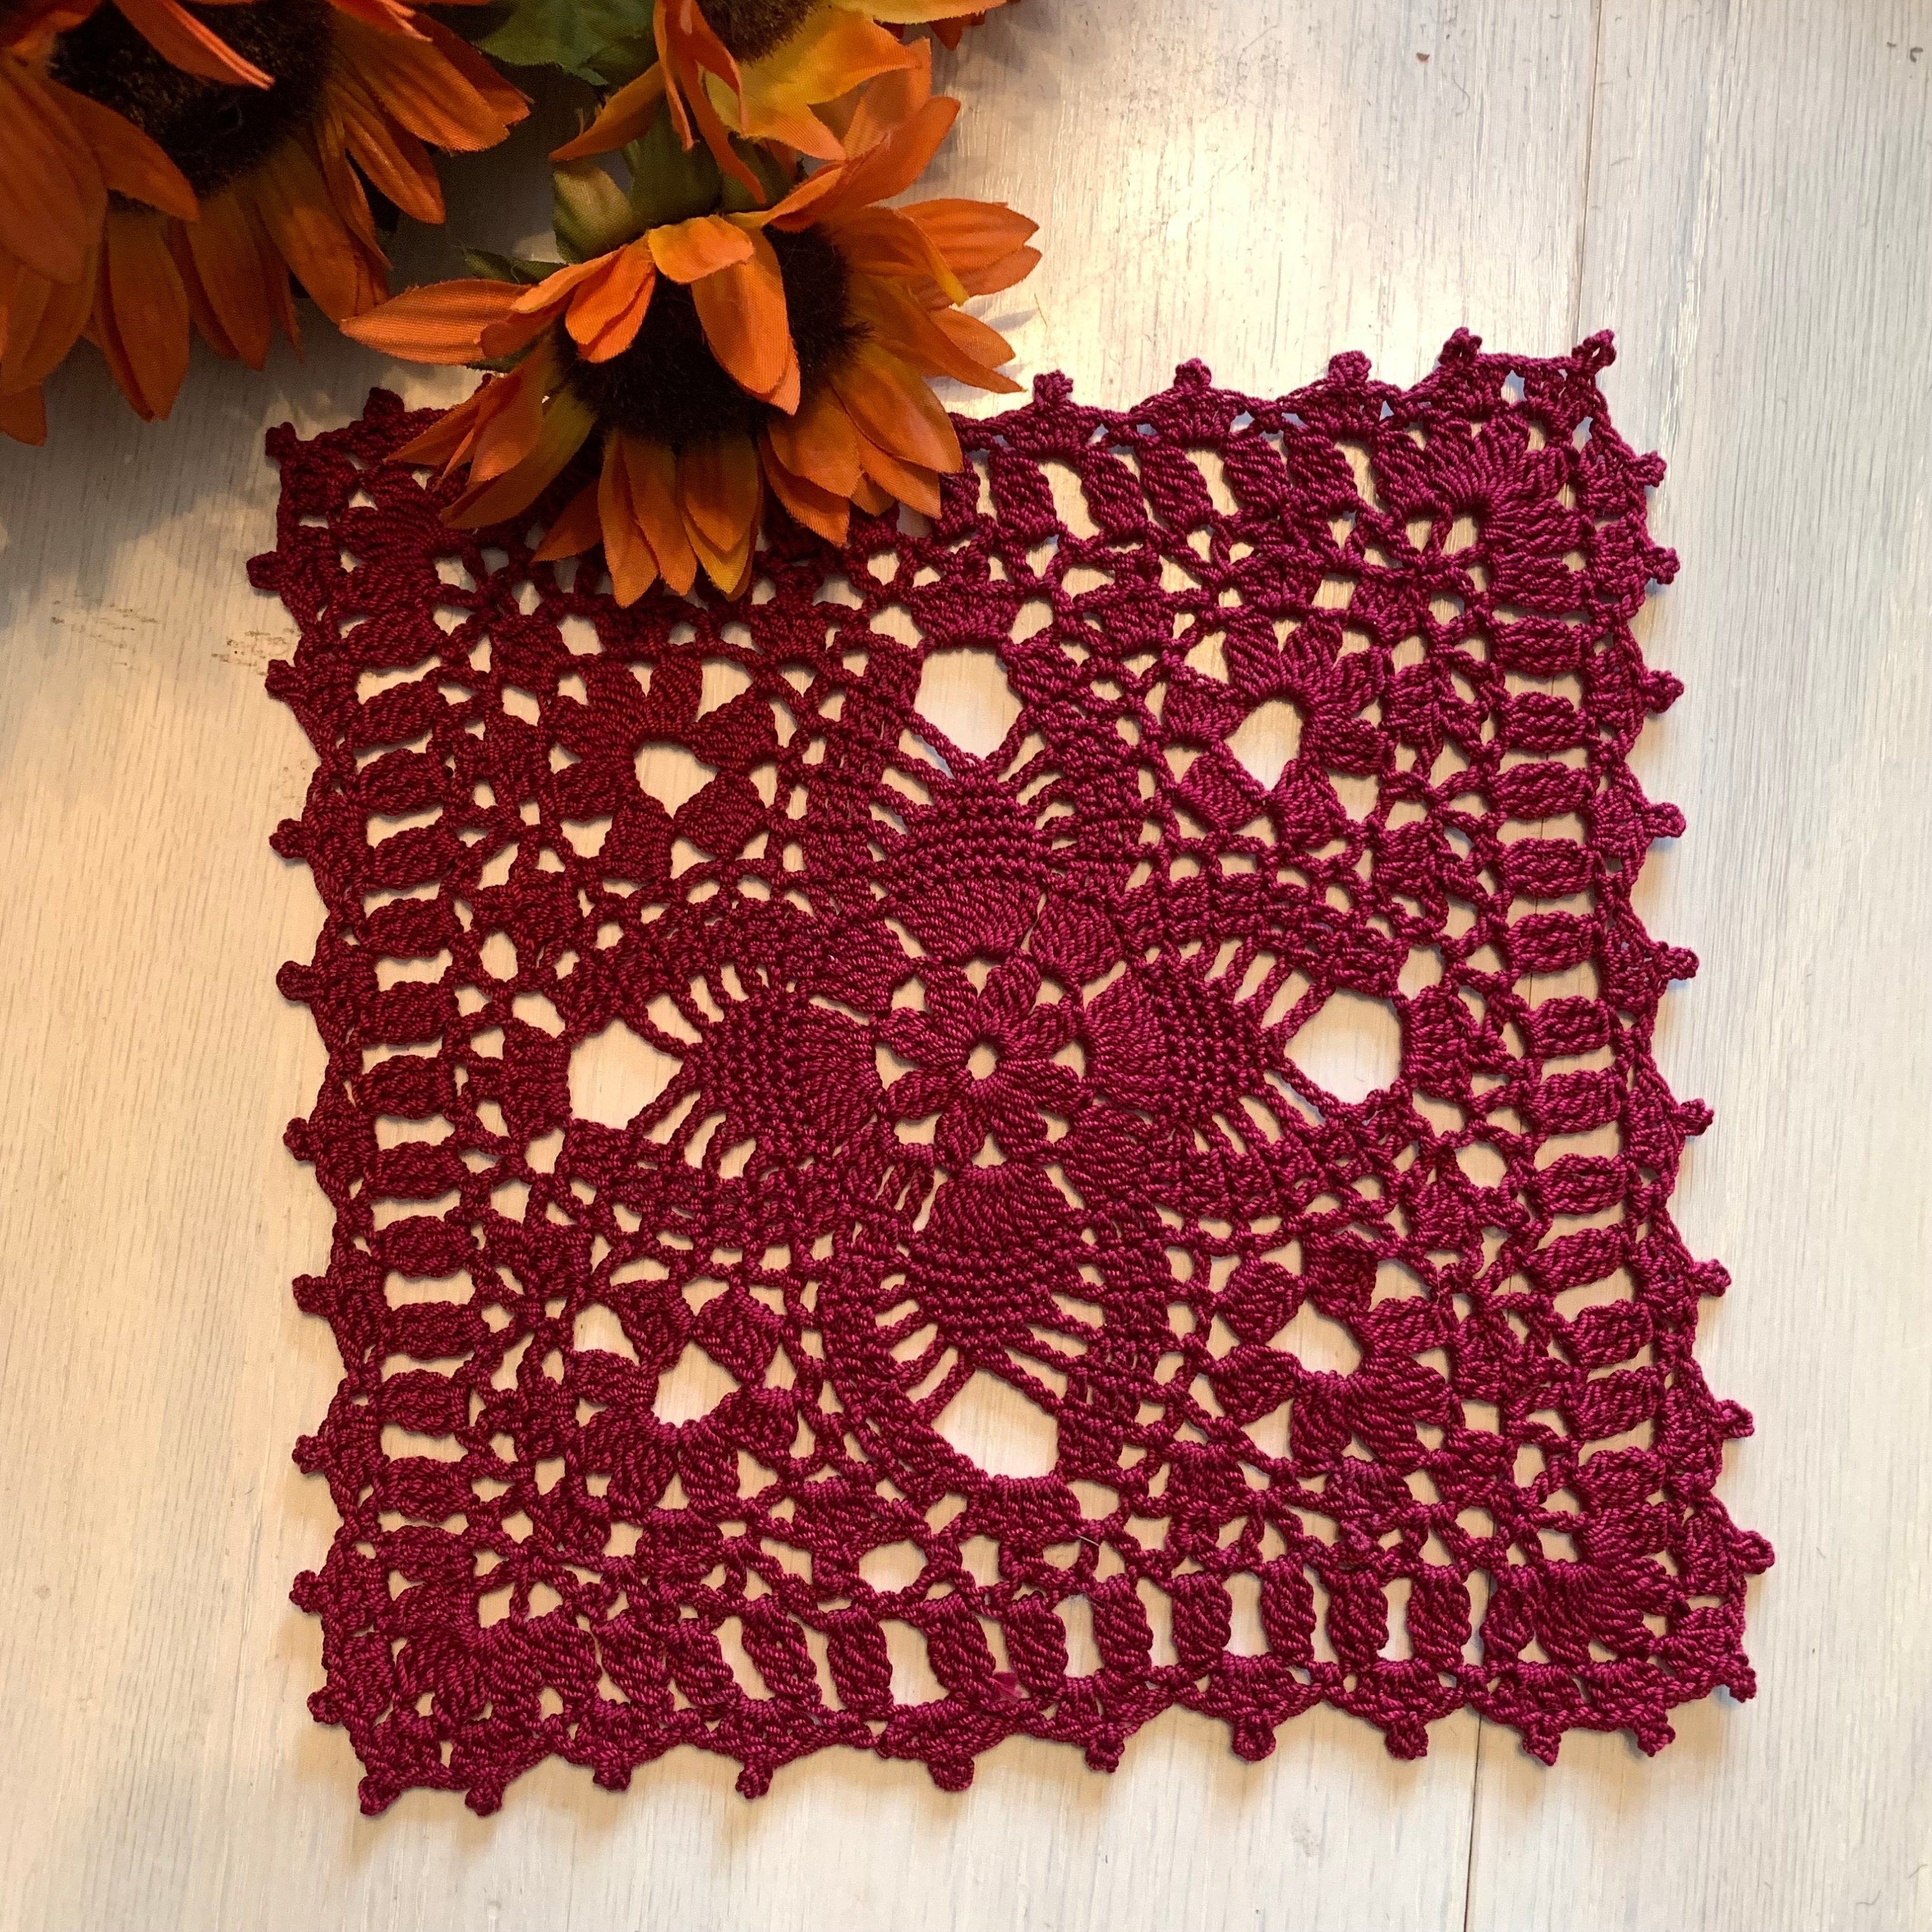 8” Square Doily- Burgundy Crochet Doily